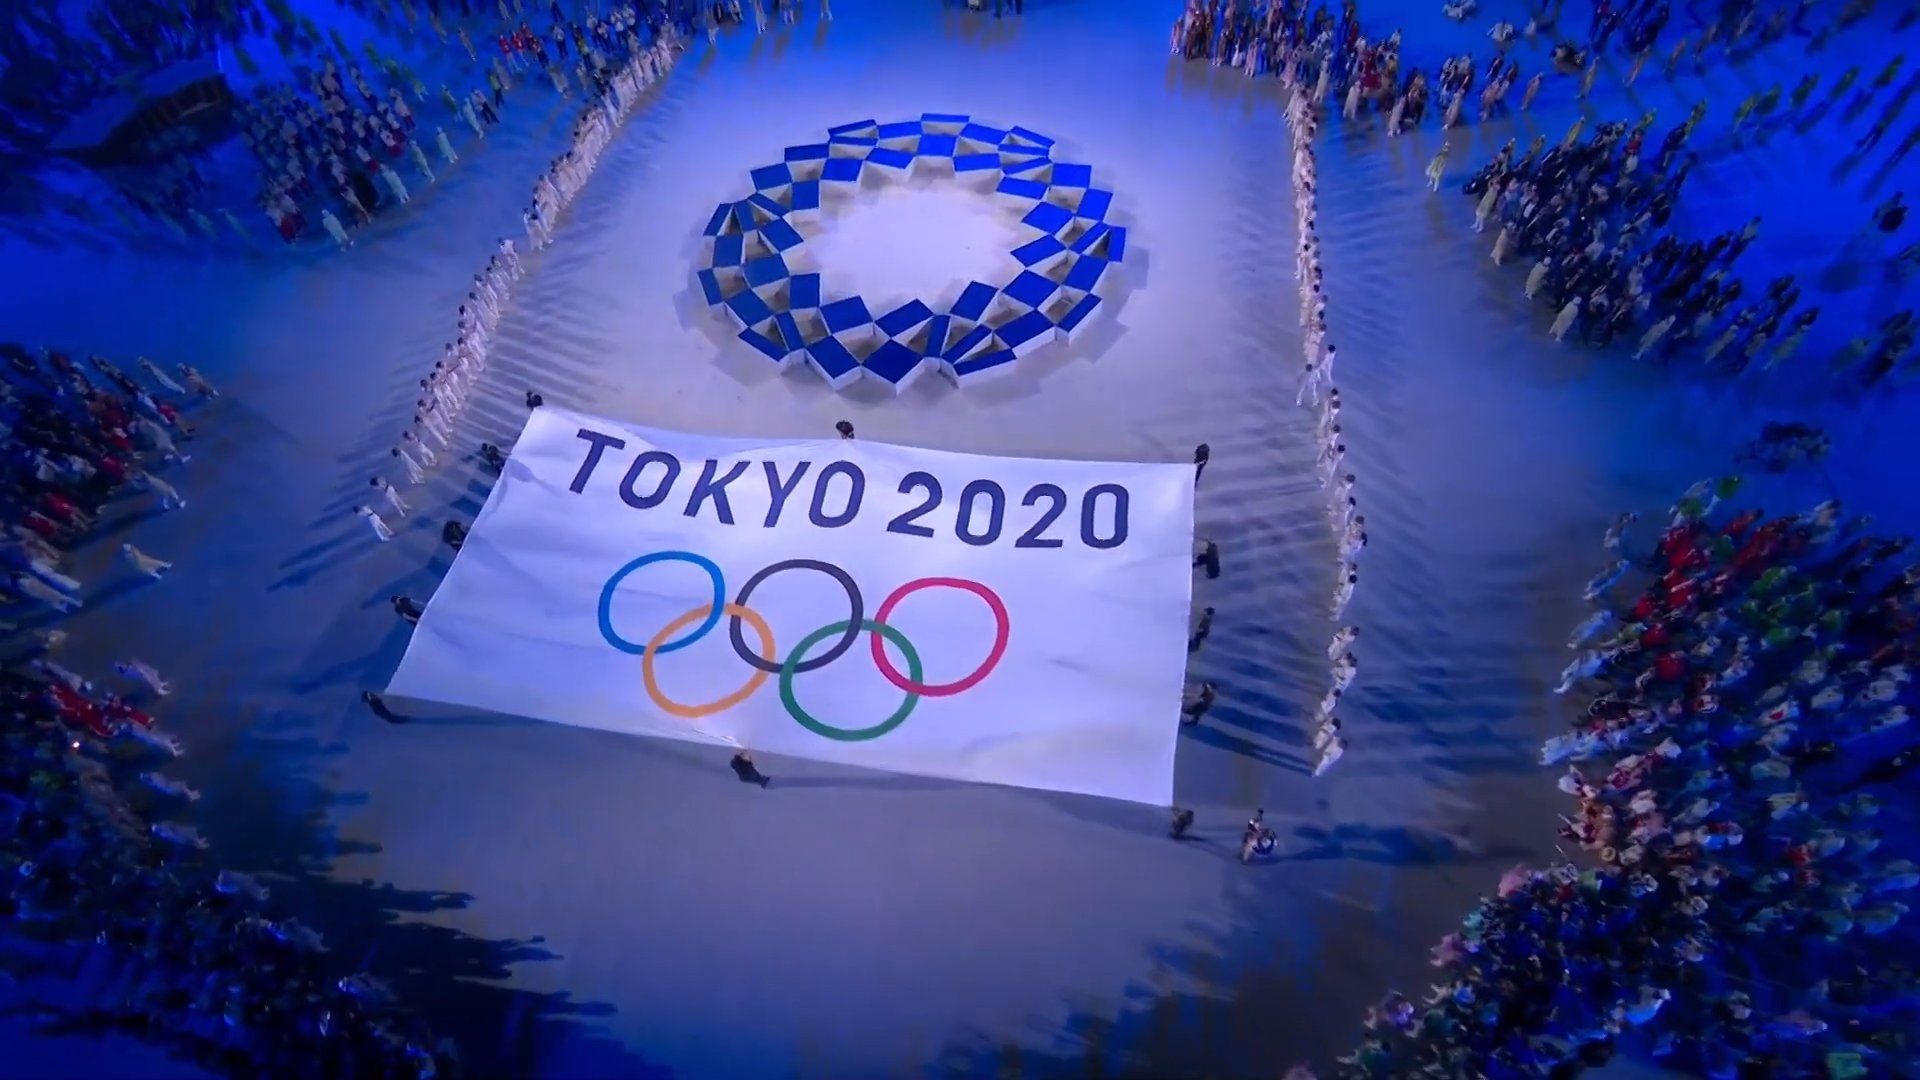 Jadwal bulutangkis olimpiade tokyo 2020